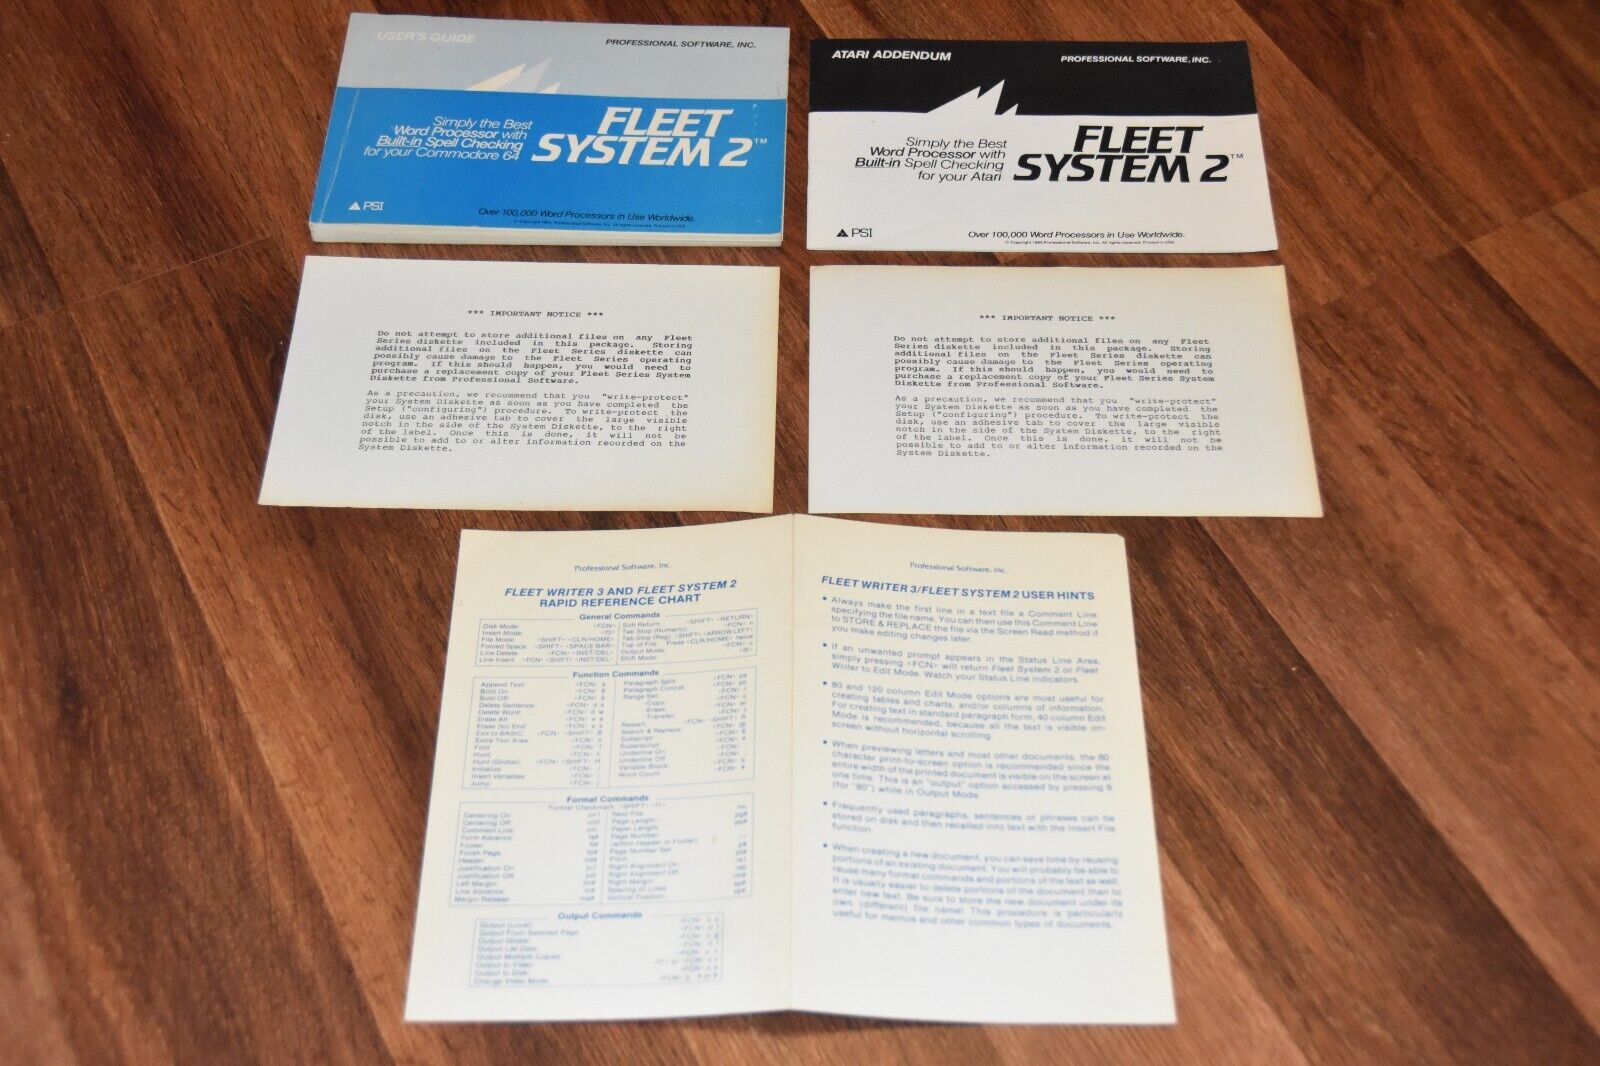 1985 Commodore 64 FLEET SYSTEM 2 Paperwork Users Guide Hints Atari Addendum 80s